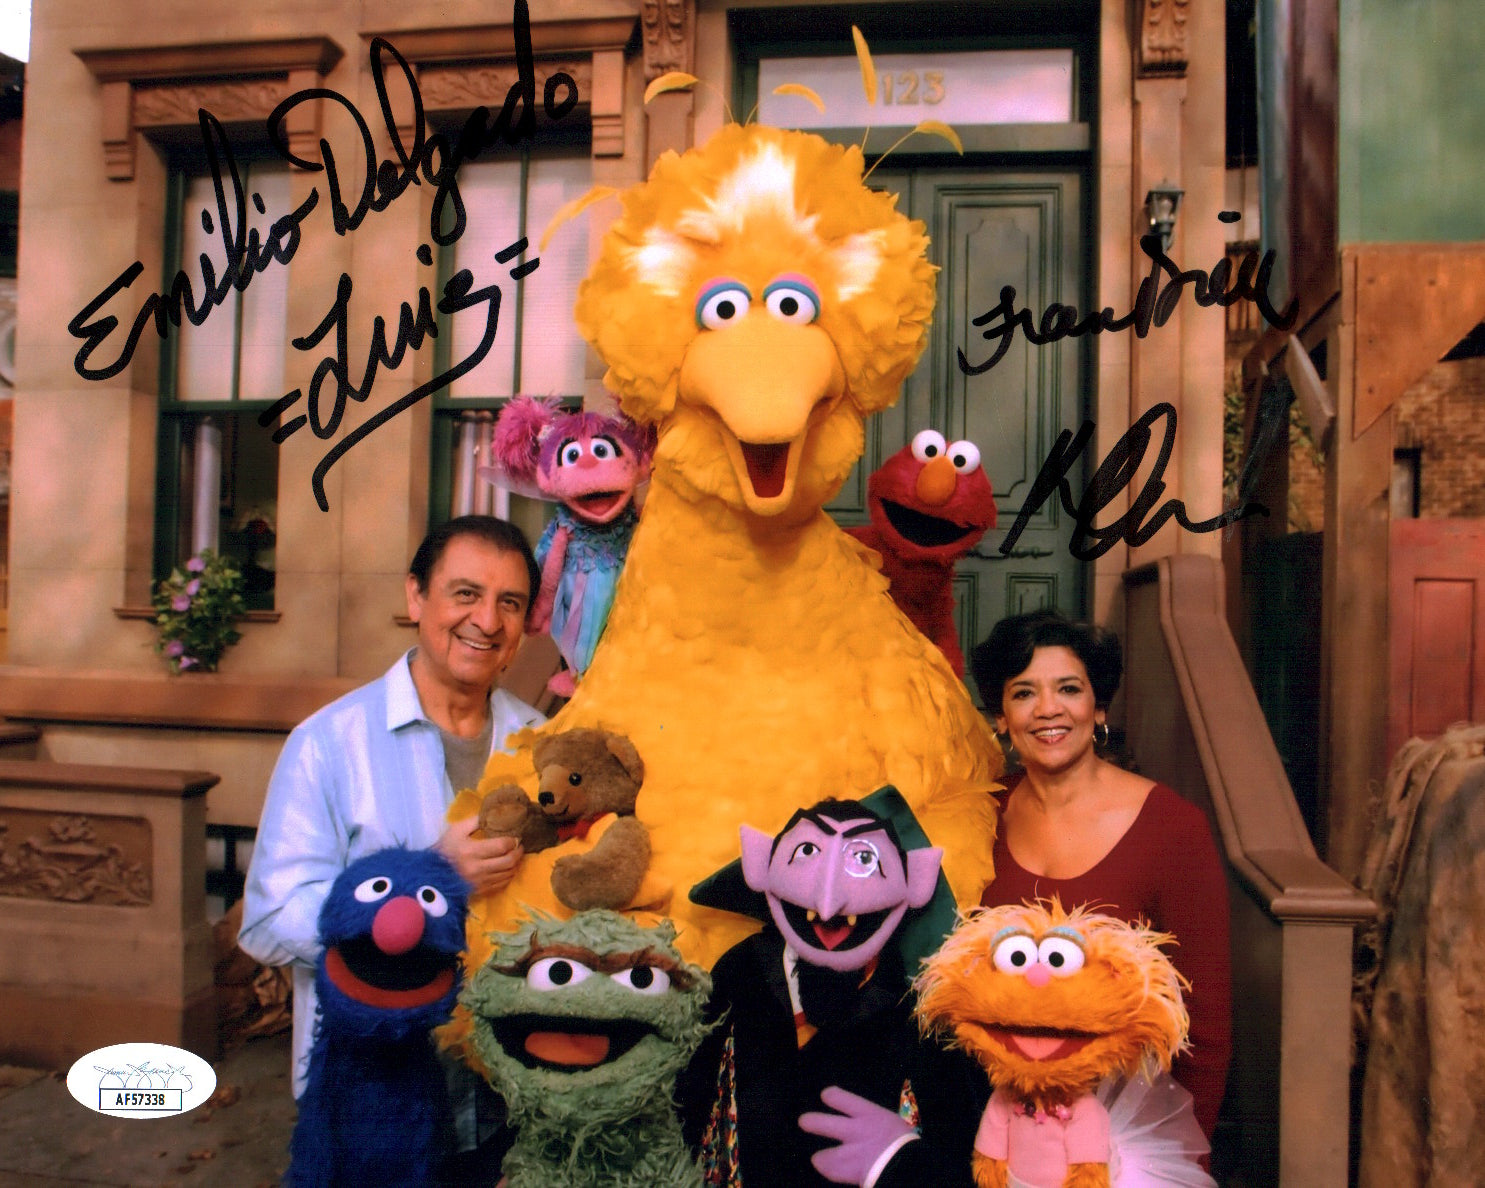 Sesame Street 8x10 Photo Cast x3 Signed Clash, Brill, Delgado JSA Certified Autograph